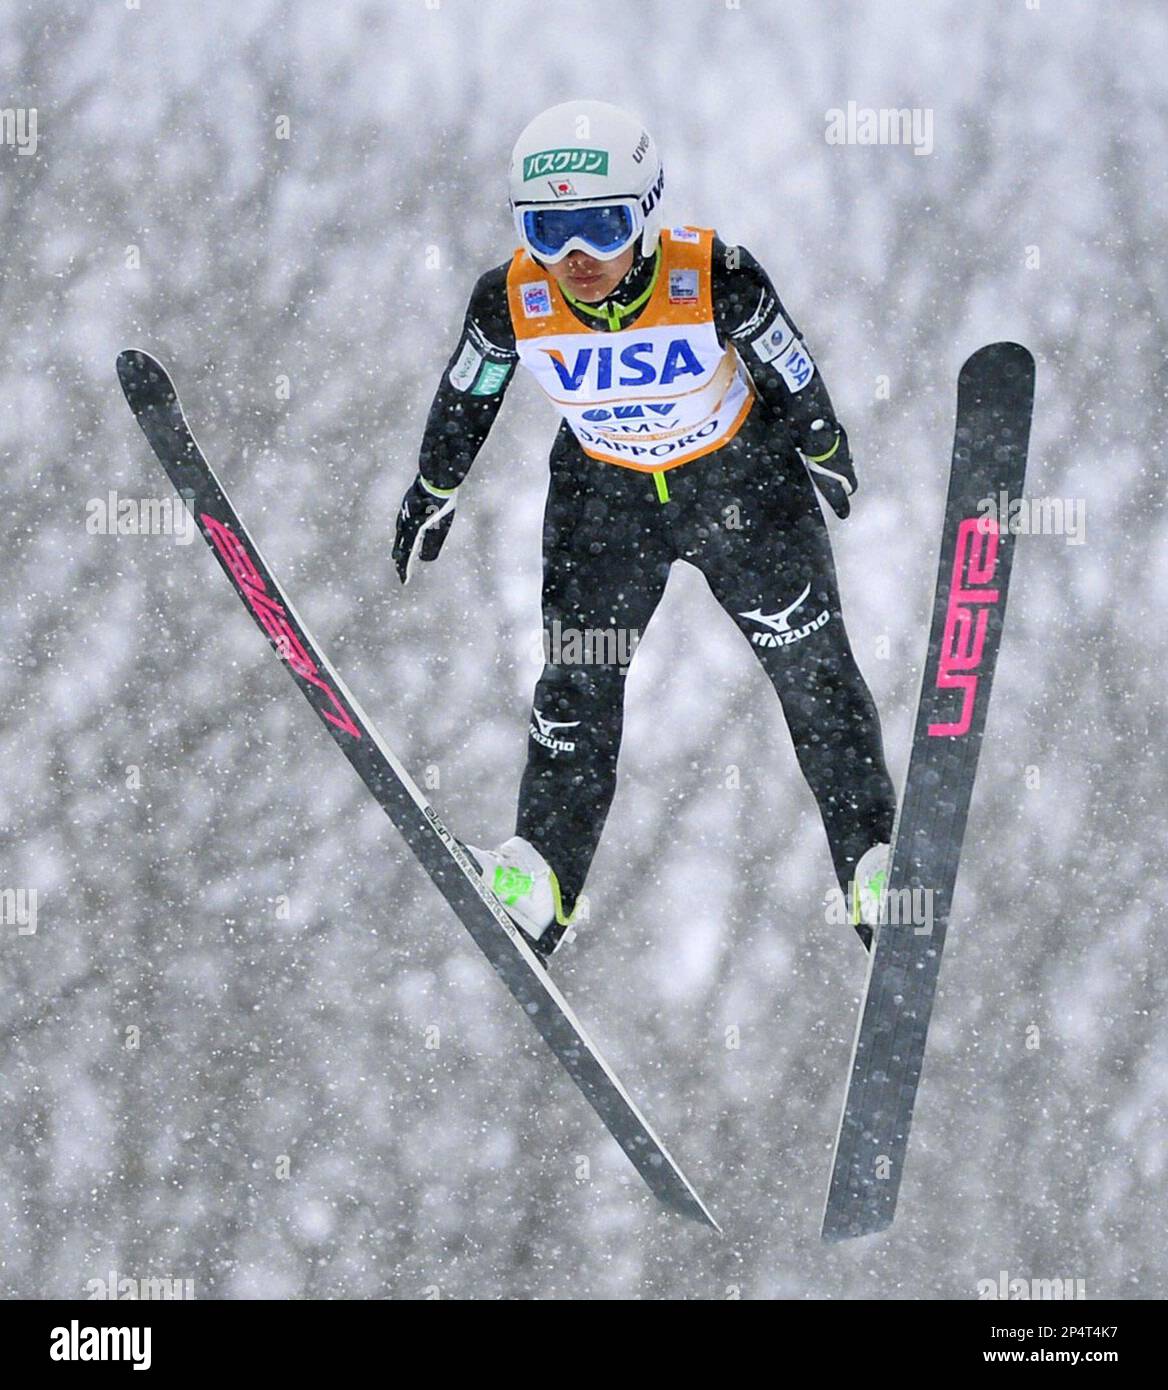 Japans Sara Takanashi makes her jump in the womens ski jump World Cup event in Sapporo, northern Japan, Saturday, Jan